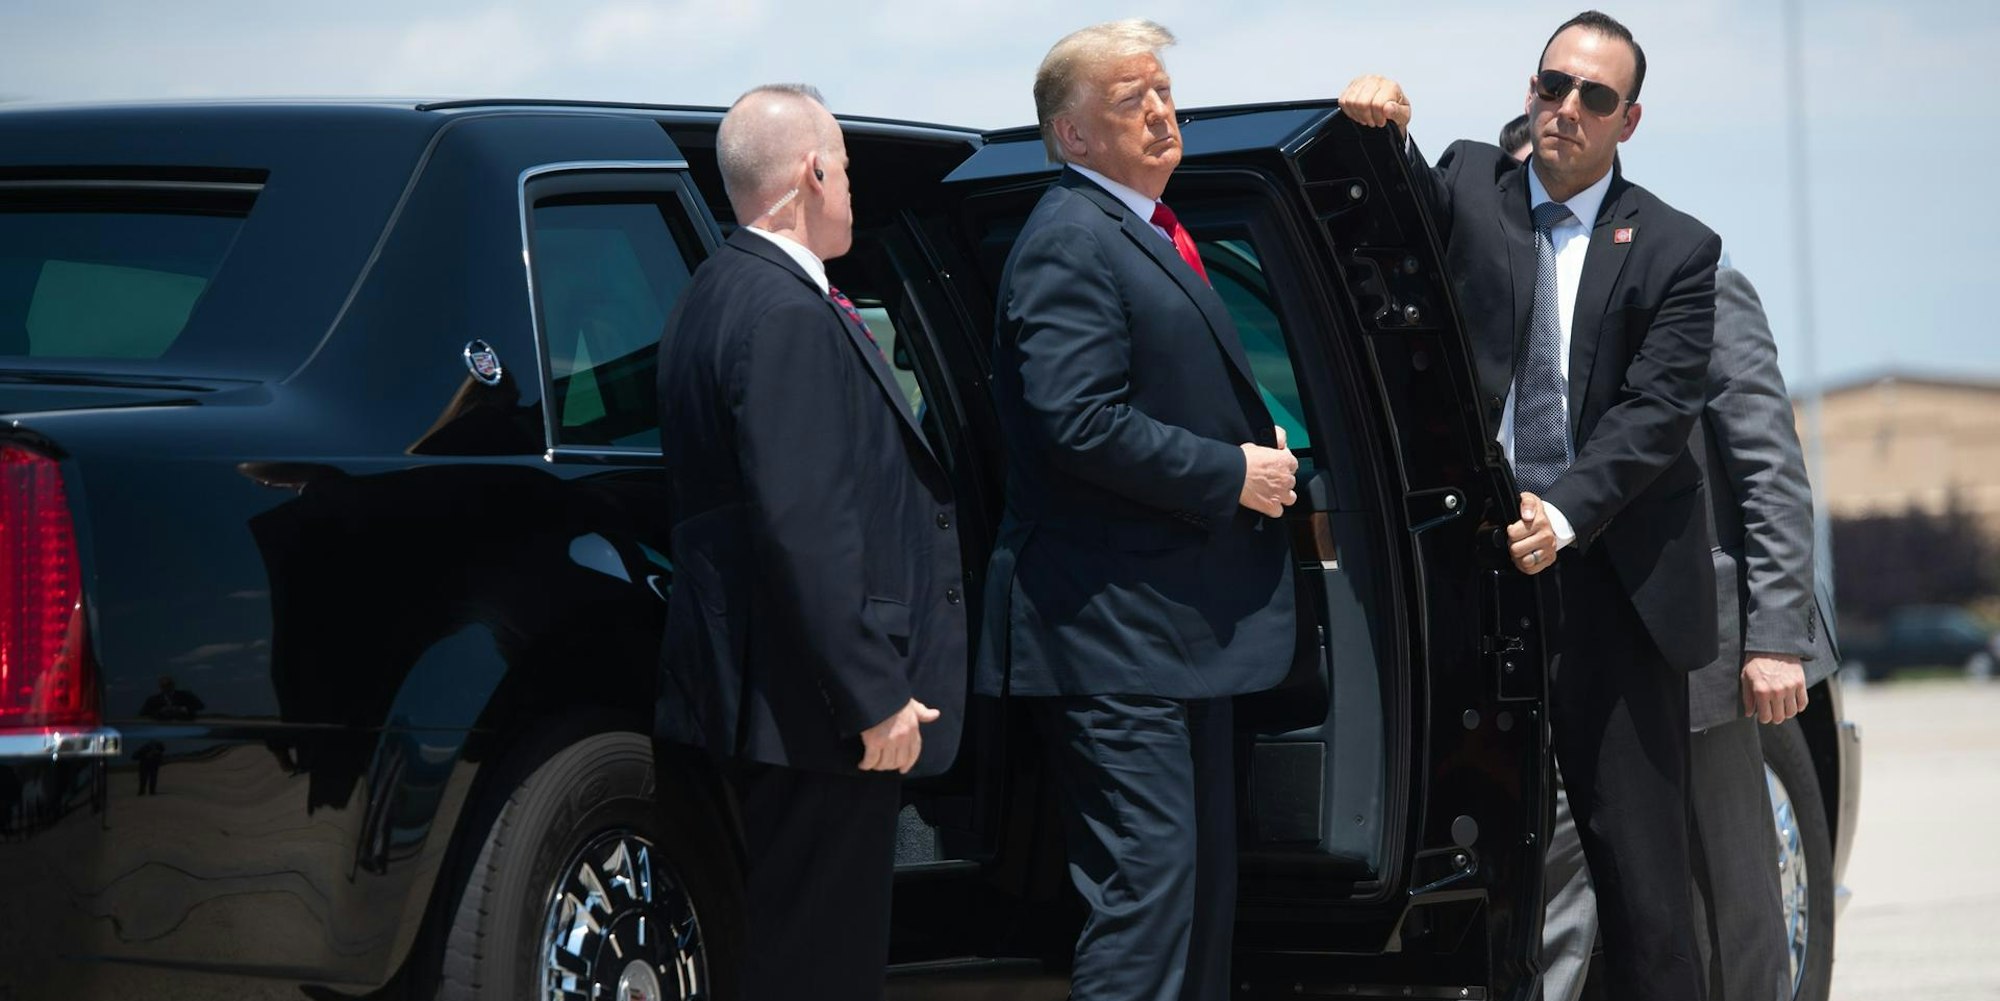 Trump Limousine